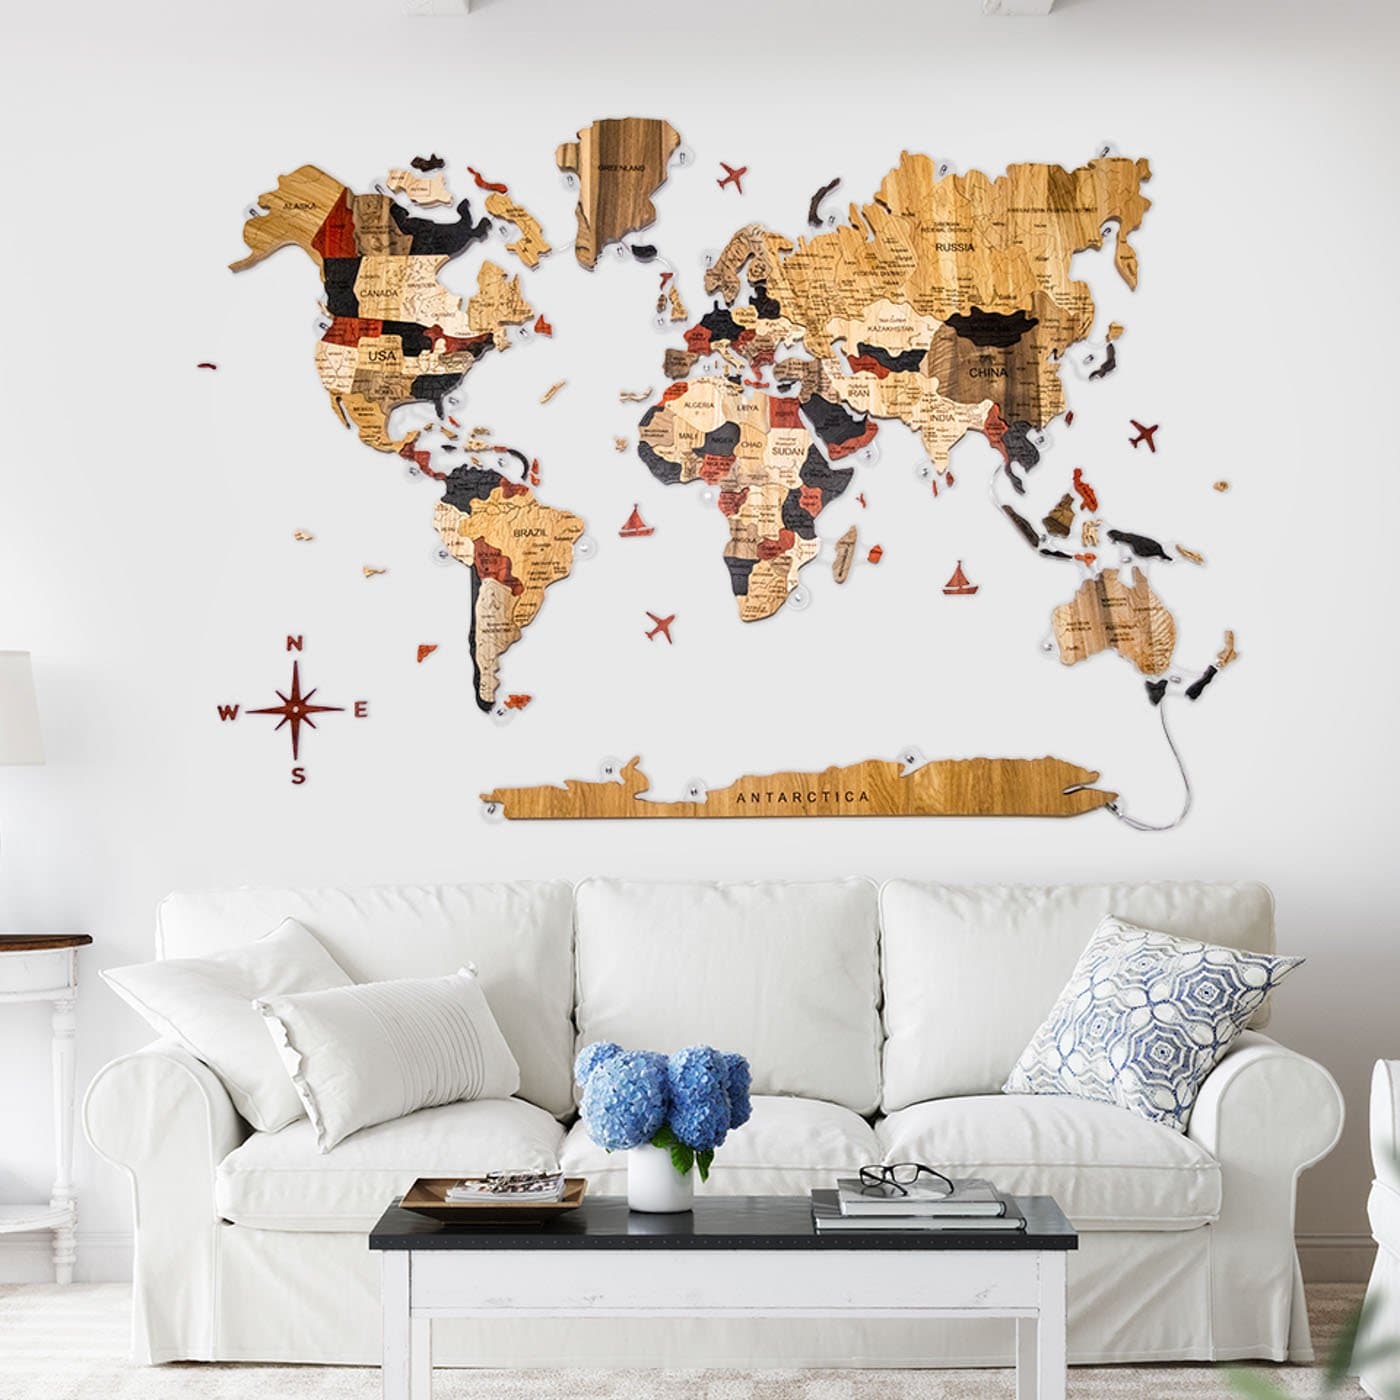 Modern Home Decor, 3D World Map, Living Room Decor, Wood Wall Art by Enjoy  The Wood